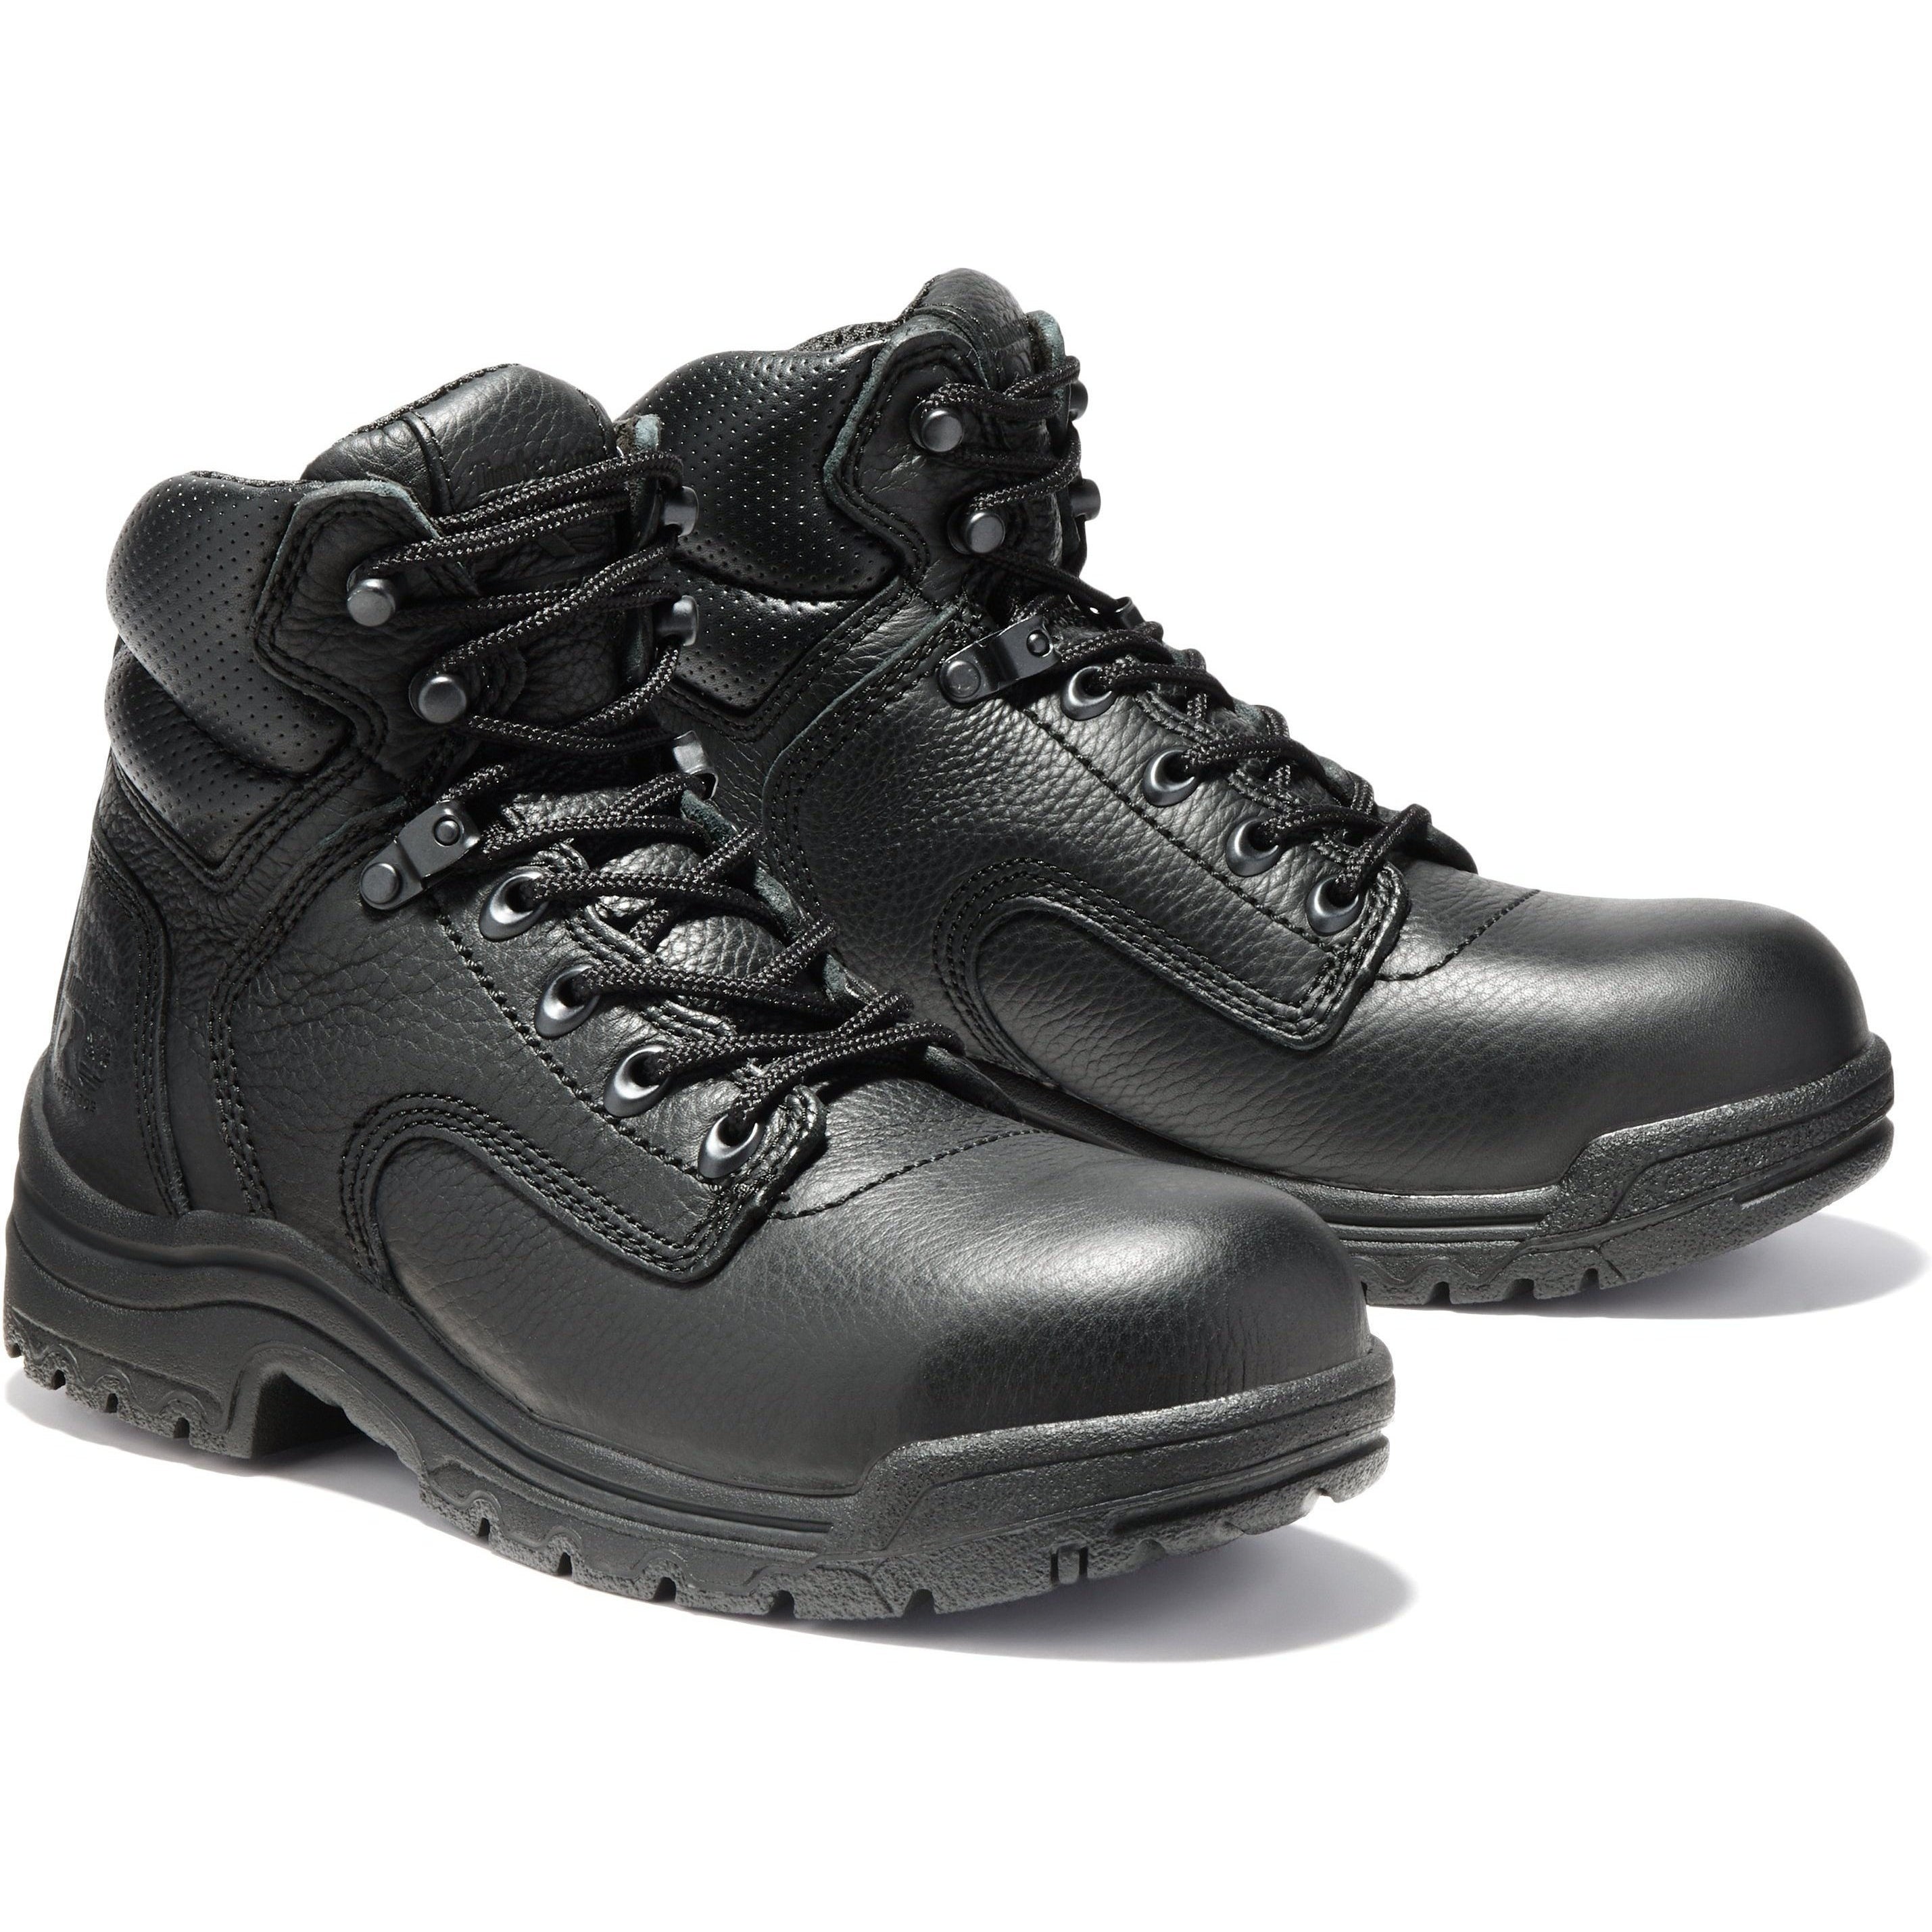 Timberland PRO Women's TITAN 6" Alloy Toe Work Boot Black TB172399001 5.5 / Medium / Black - Overlook Boots